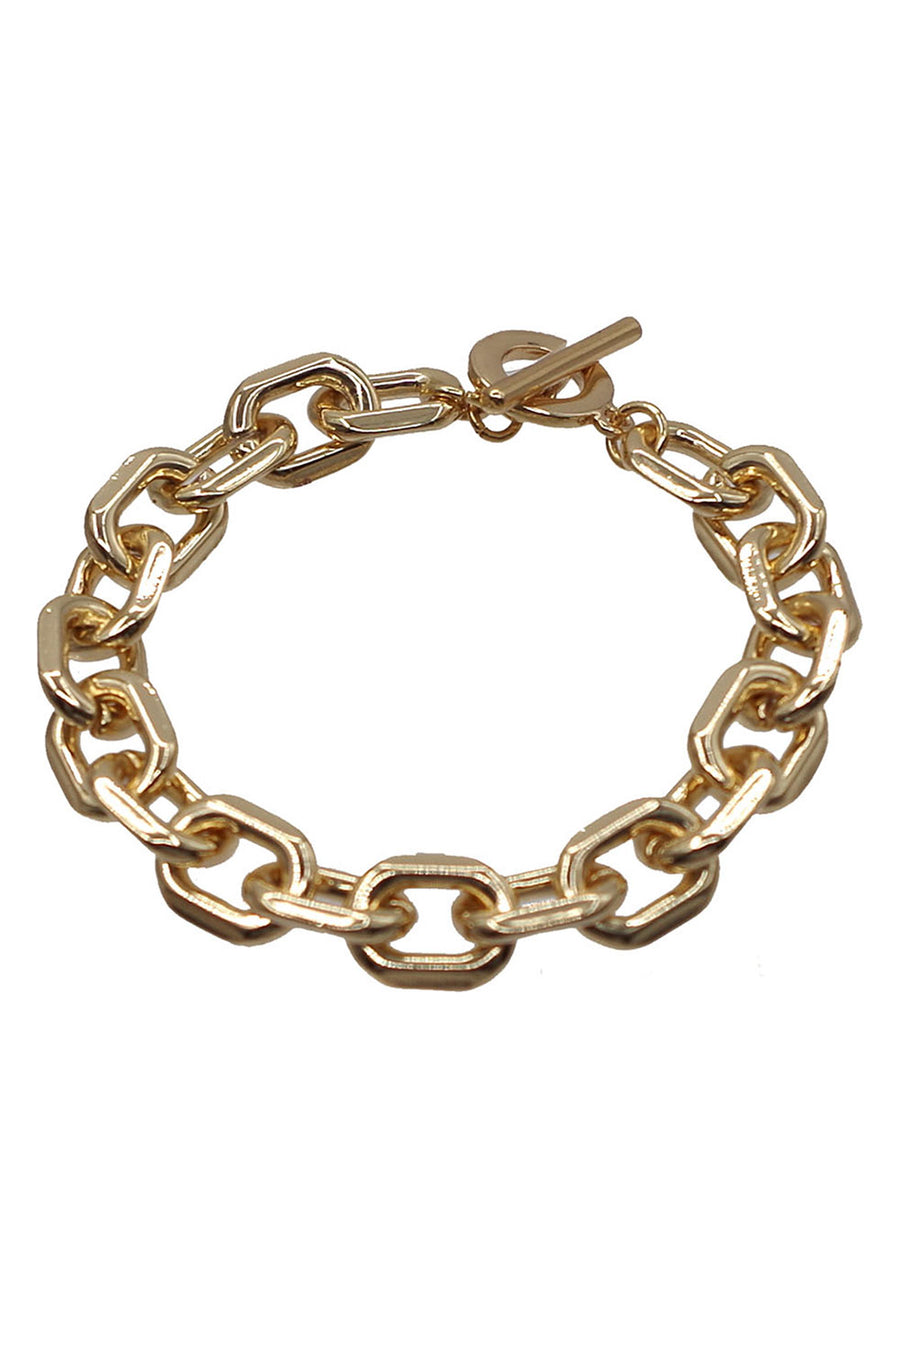 Women's Gold Link Chain Bracelet - Vacay Land 